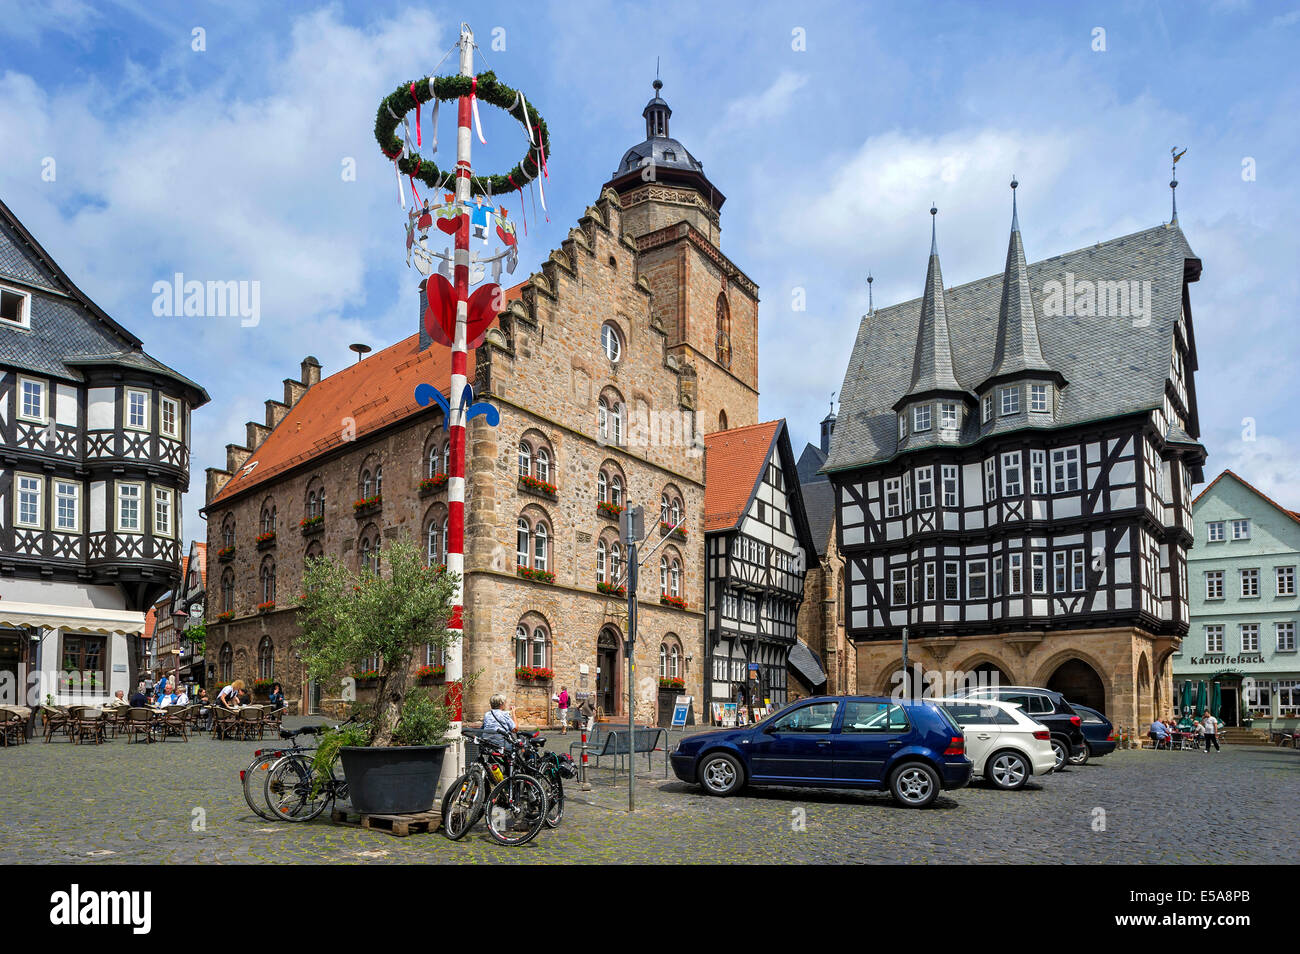 Weinhaus building, Walpurgis Church, Town Hall, Market Square, historic centre, Alsfeld, Hesse, Germany Stock Photo